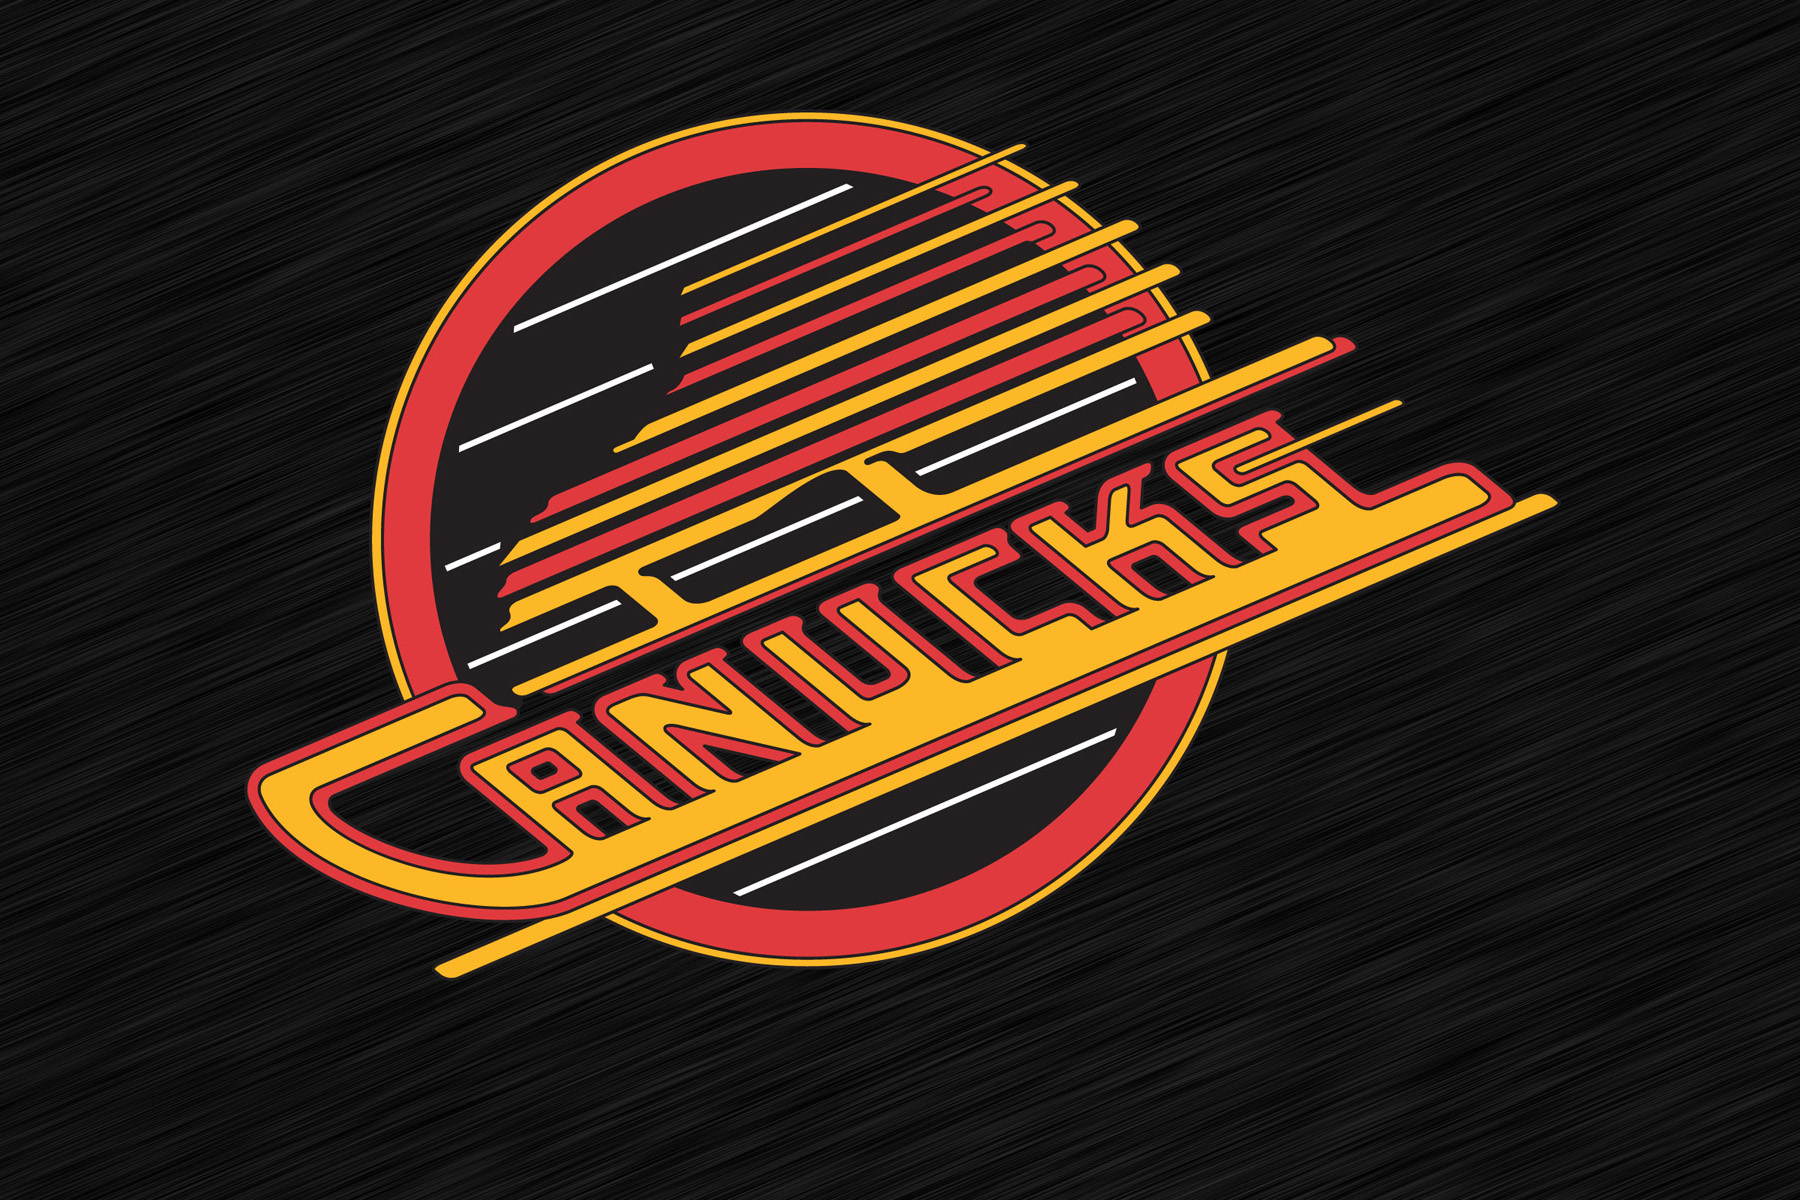  '47 Vancouver Canucks Men's Vintage Skate Logo Fan T